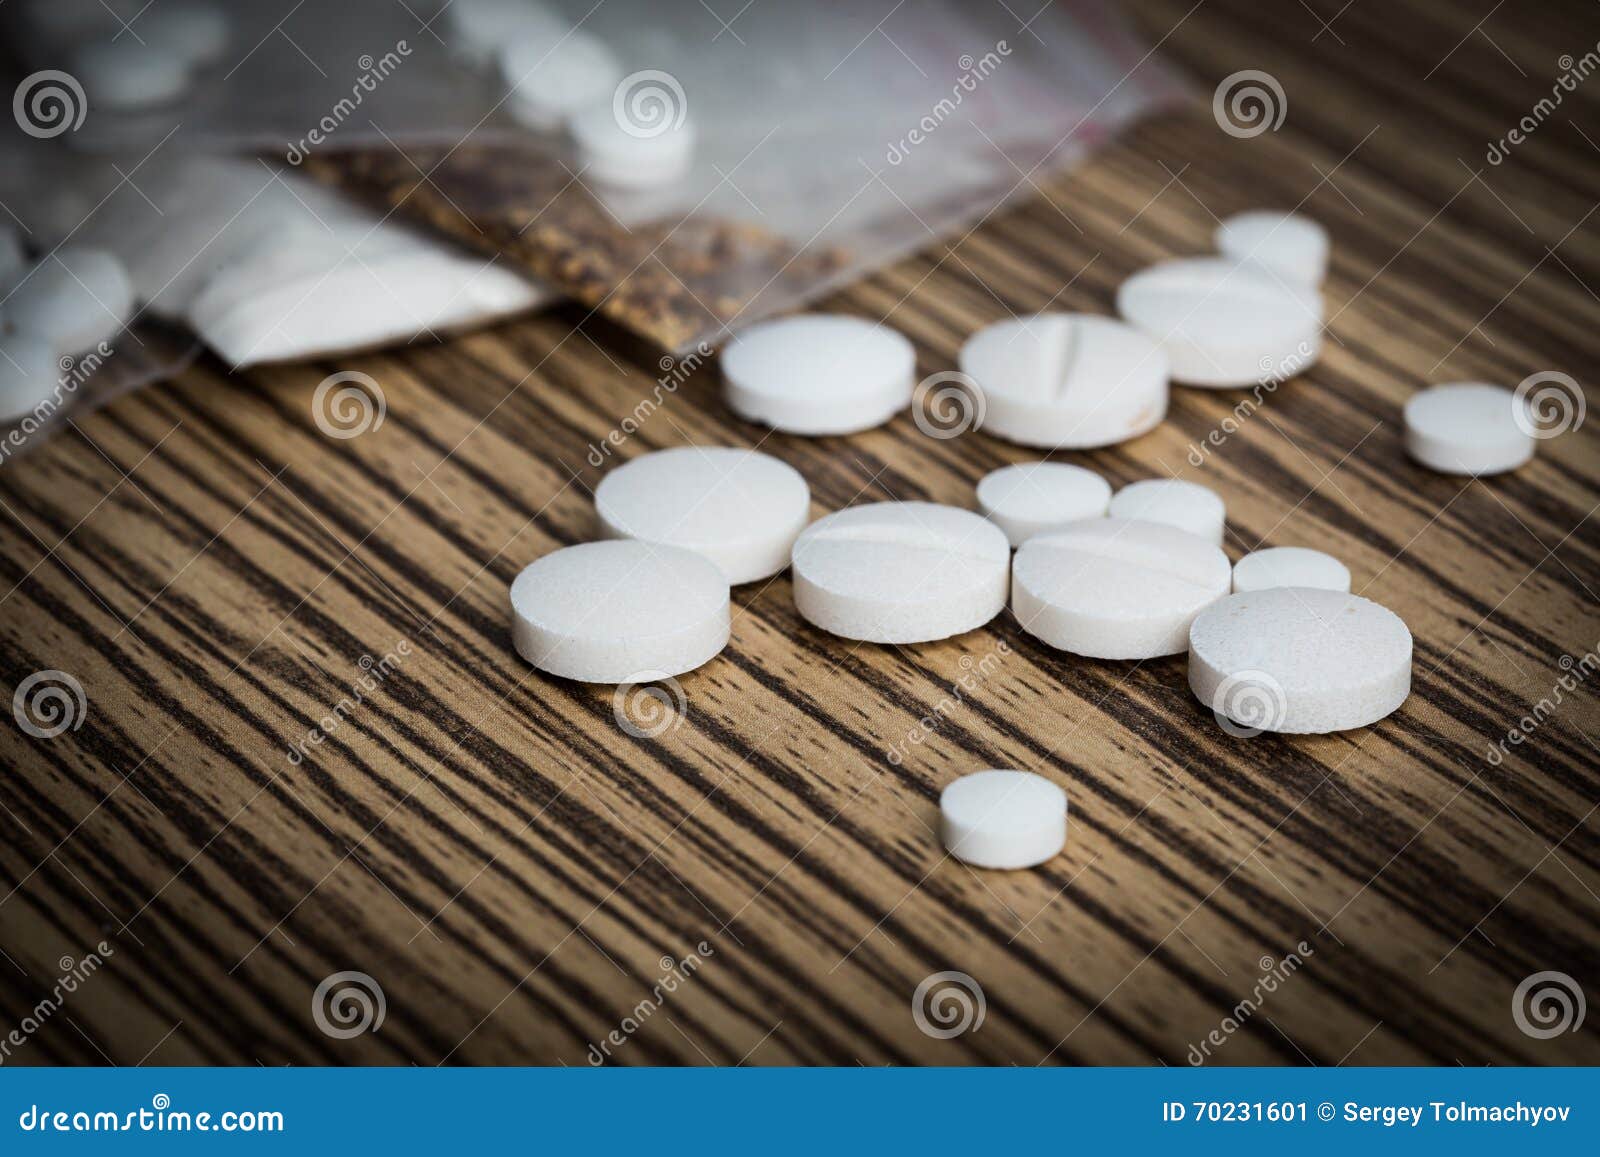 narcotic pills